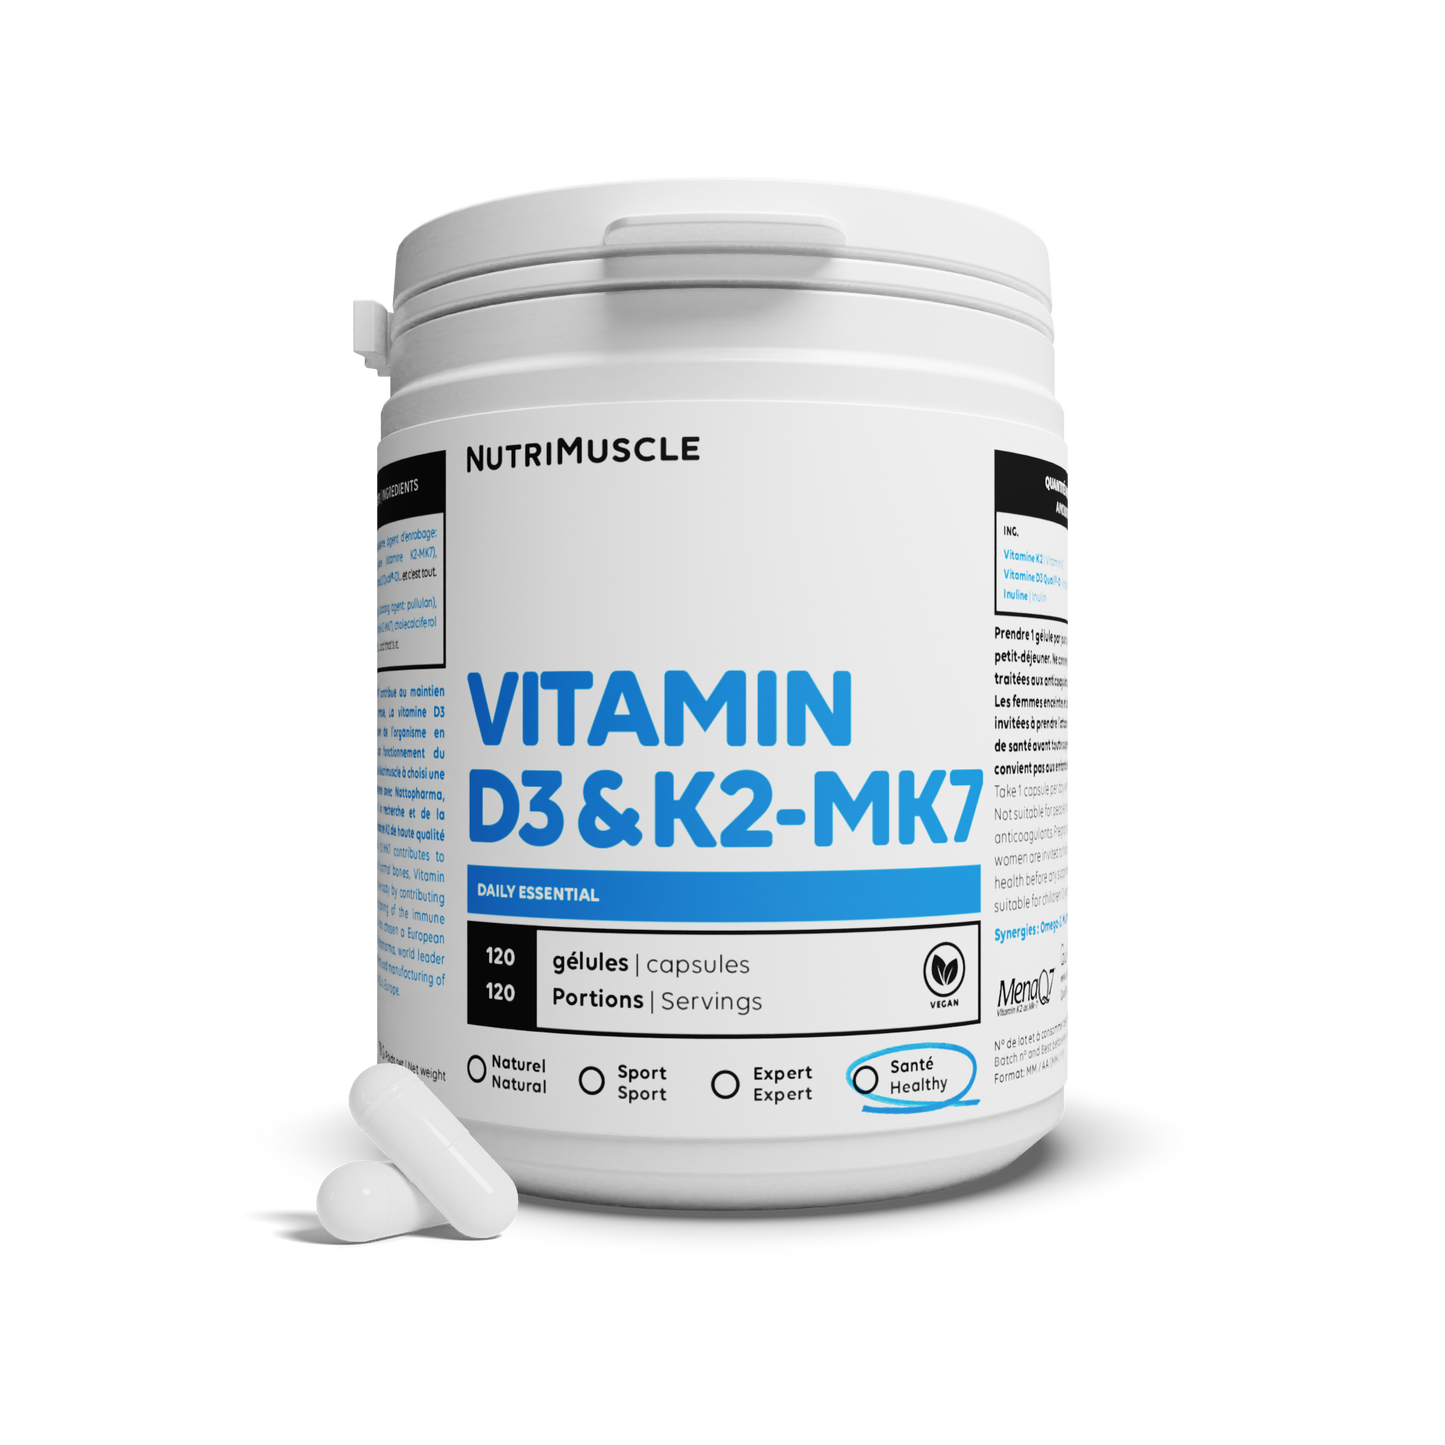 Vitamins D3 + K2-MK7